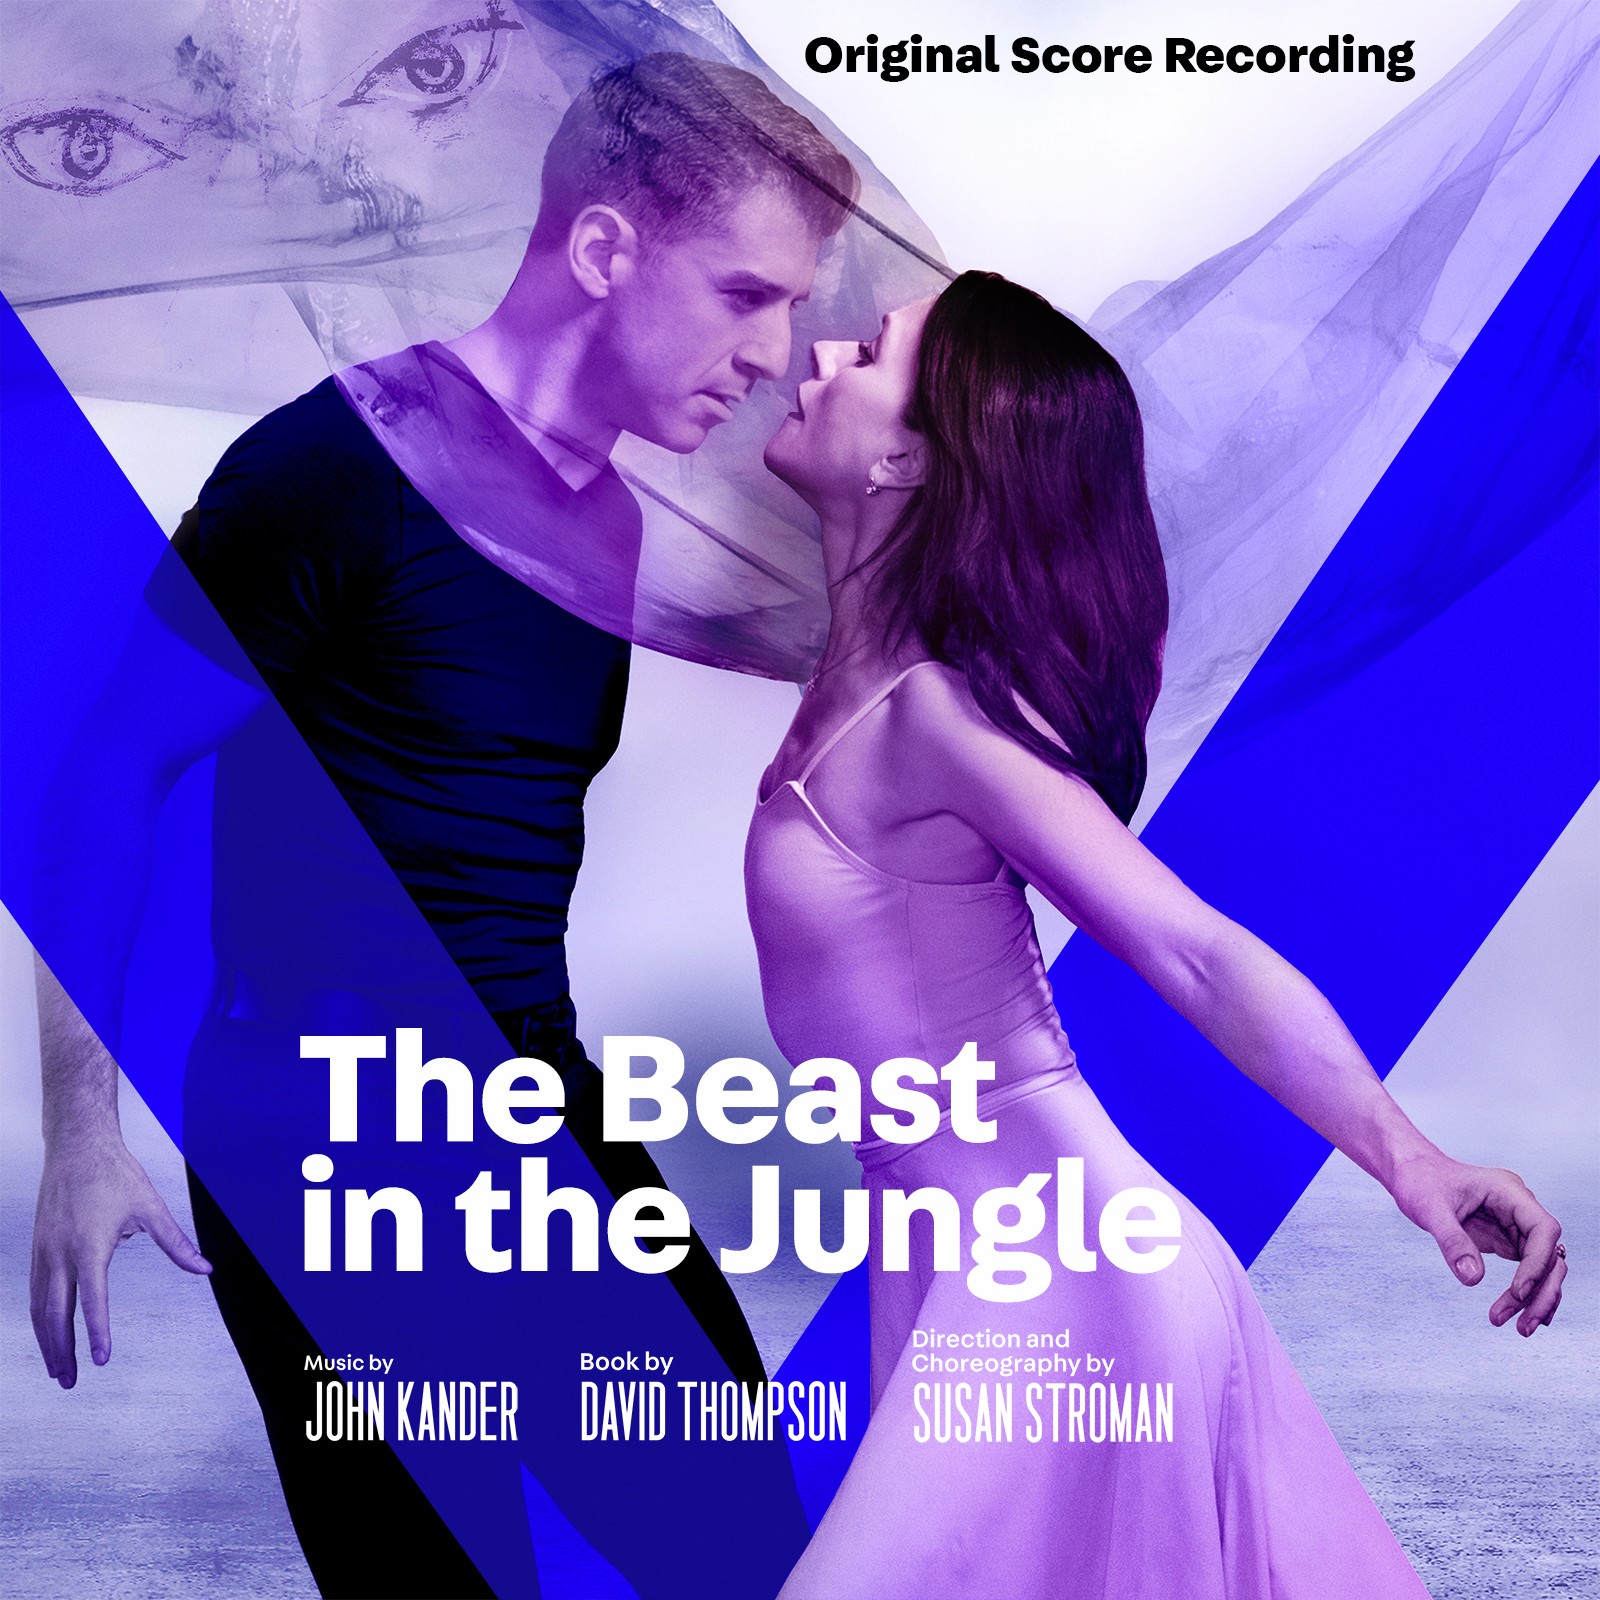 The Beast in the Jungle – Original Score Recording